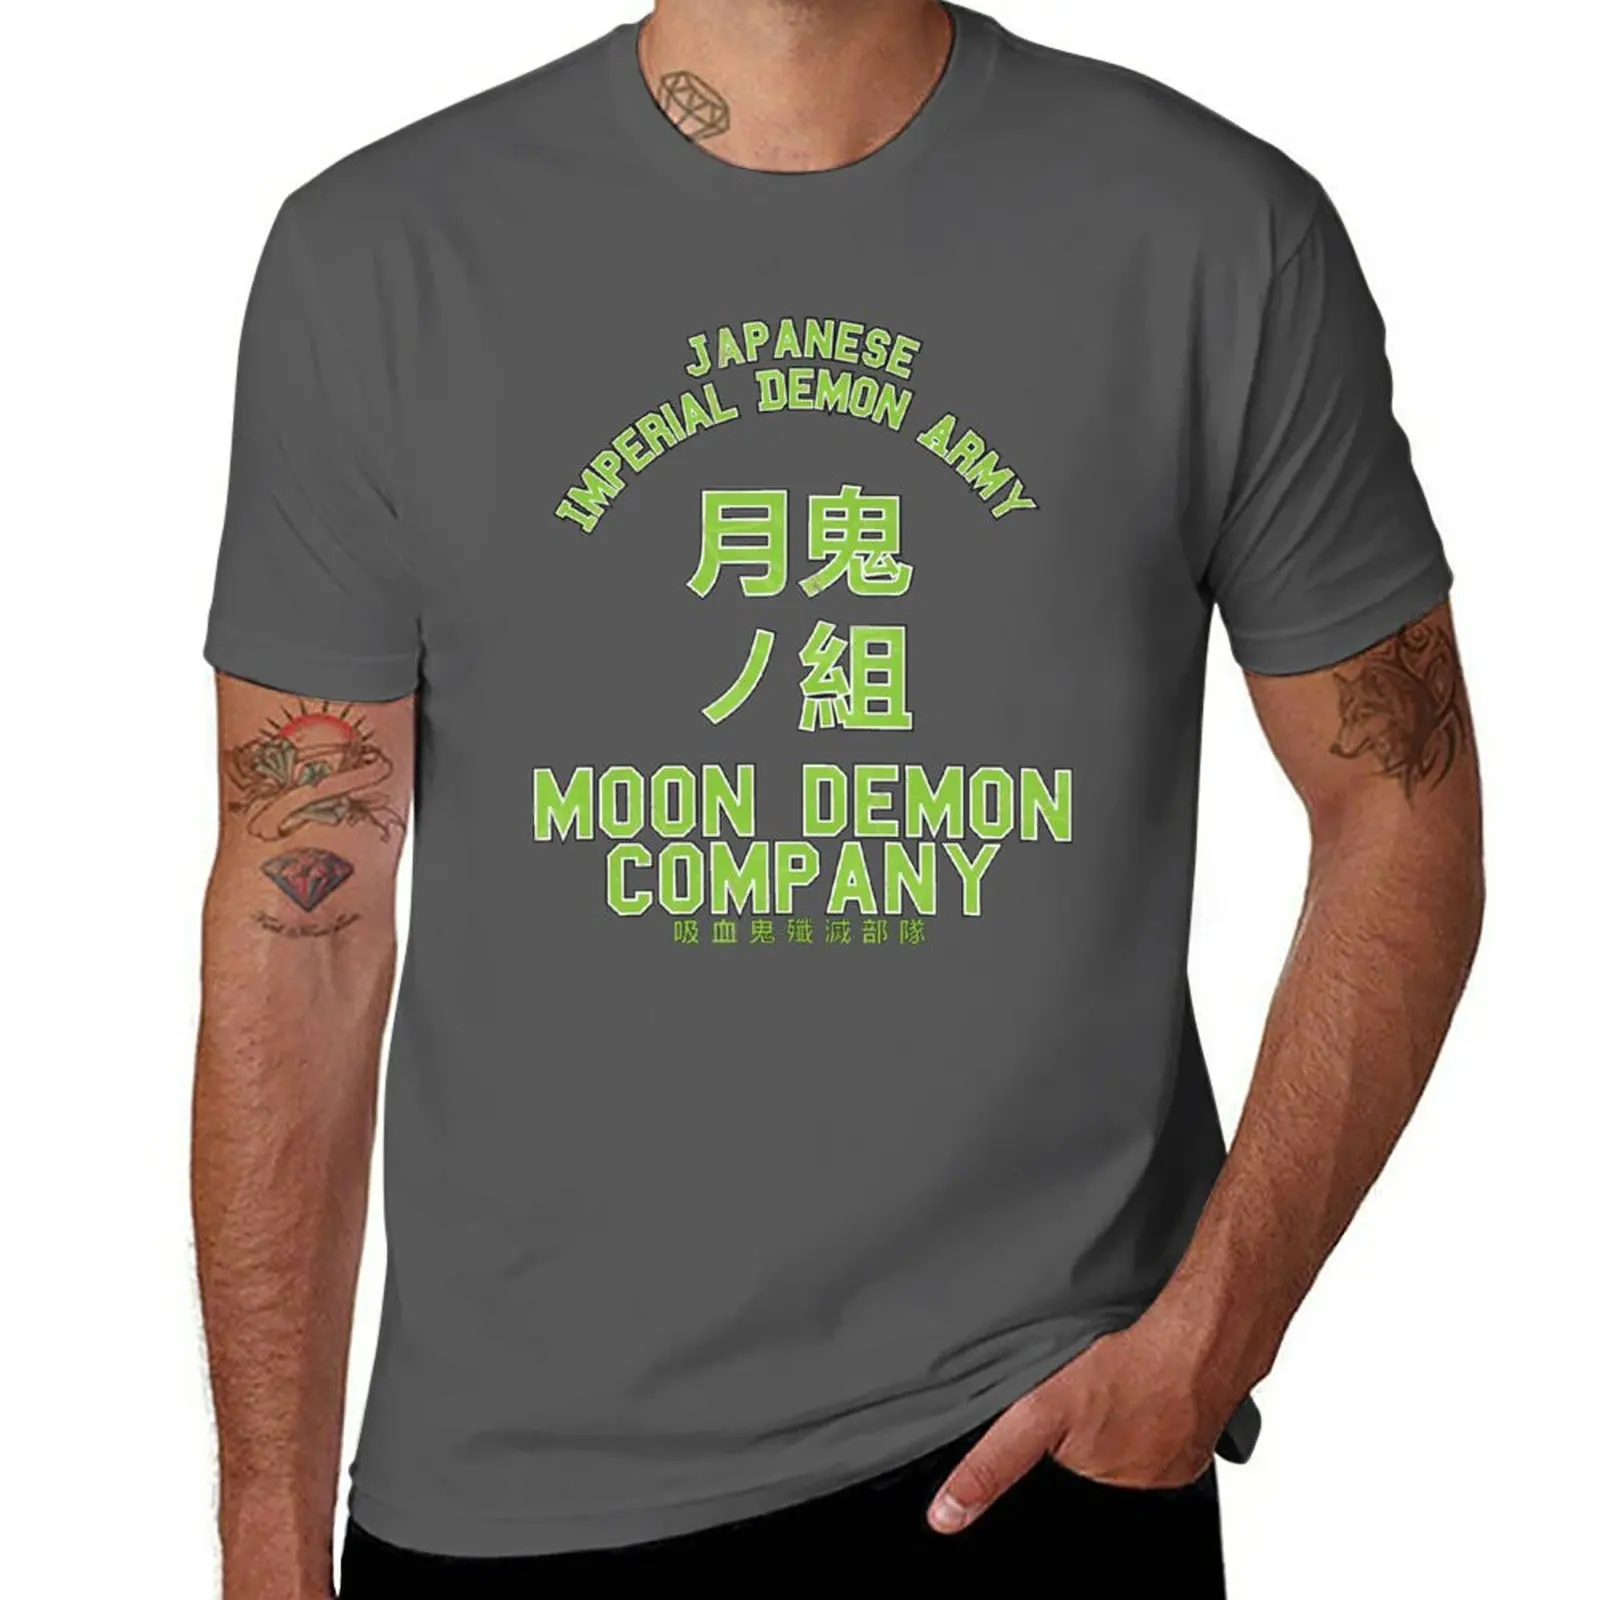 

Футболка New Moon Demon Company (зеленая), эстетическая одежда, Винтажная футболка, мужские футболки